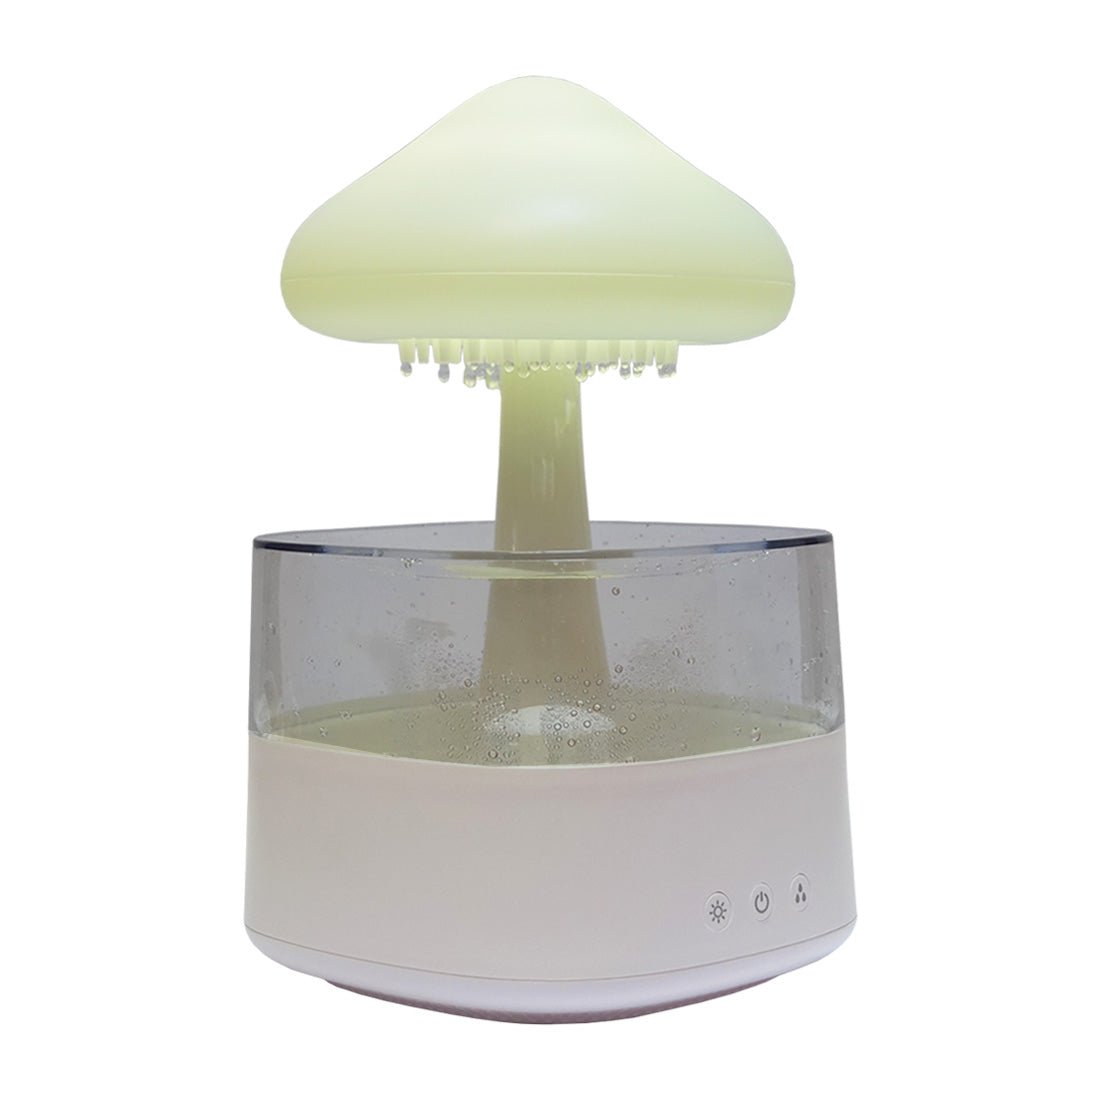 Mushroom Rain Cloud Humidifier - White - إضاءة - Store 974 | ستور ٩٧٤